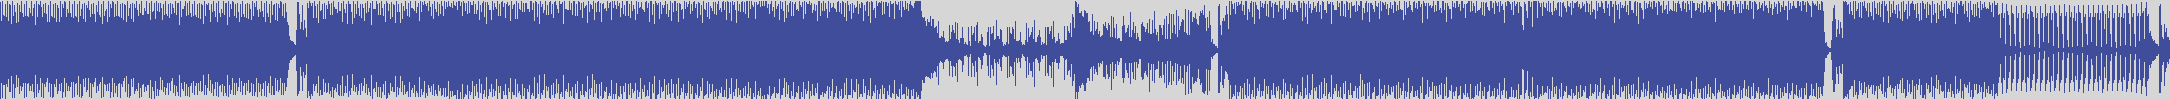 nf_boyz_records [NFY006] Bass Da Boy - Xeno Phobiko [Alterego Mix] audio wave form